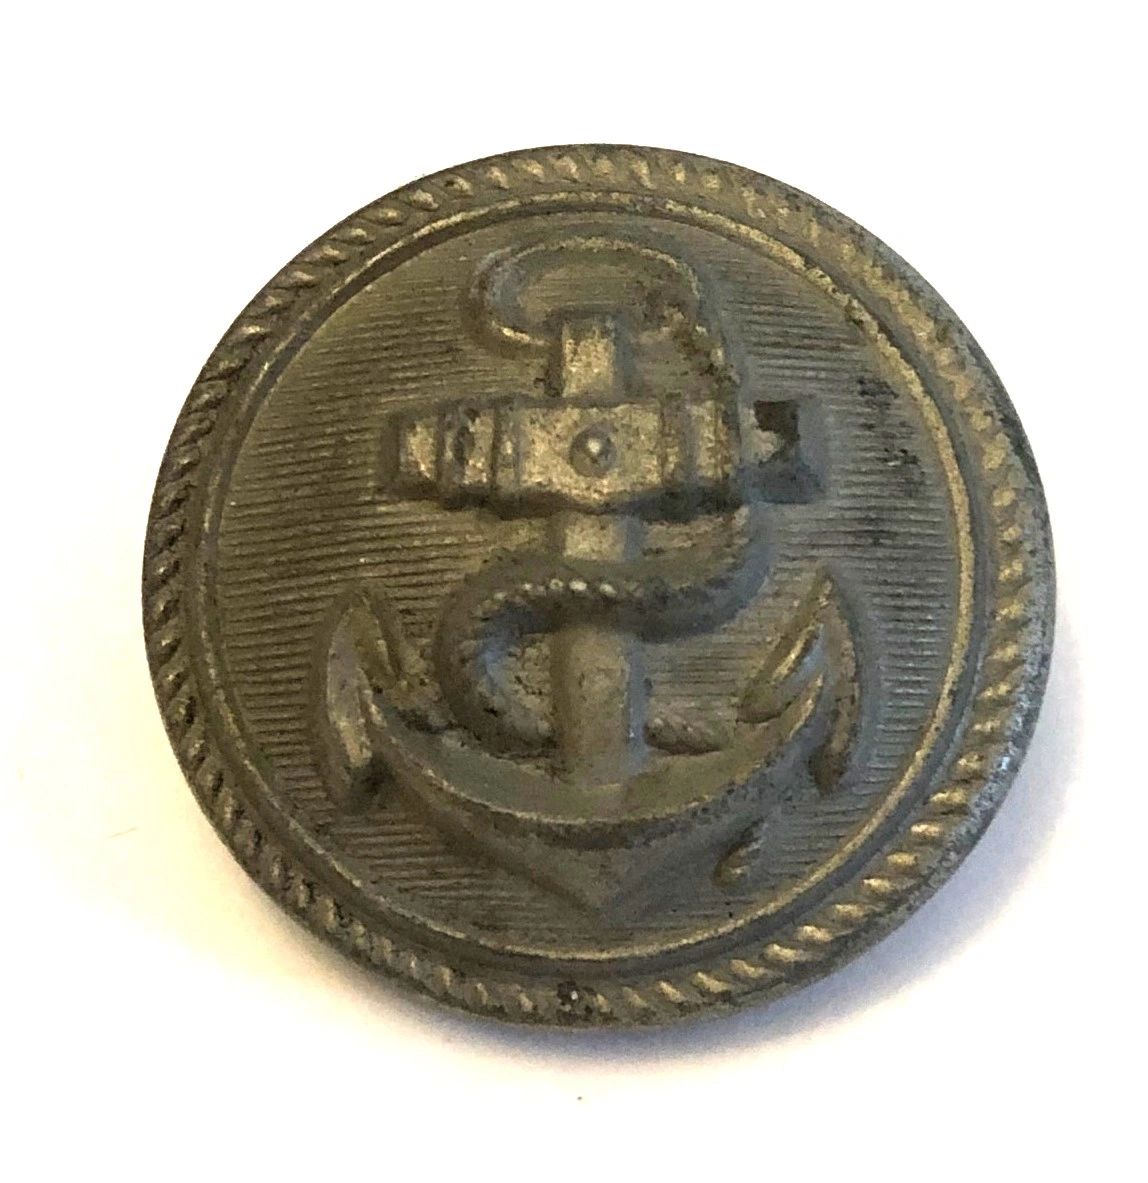 A single German Kriegsmarine button marked 